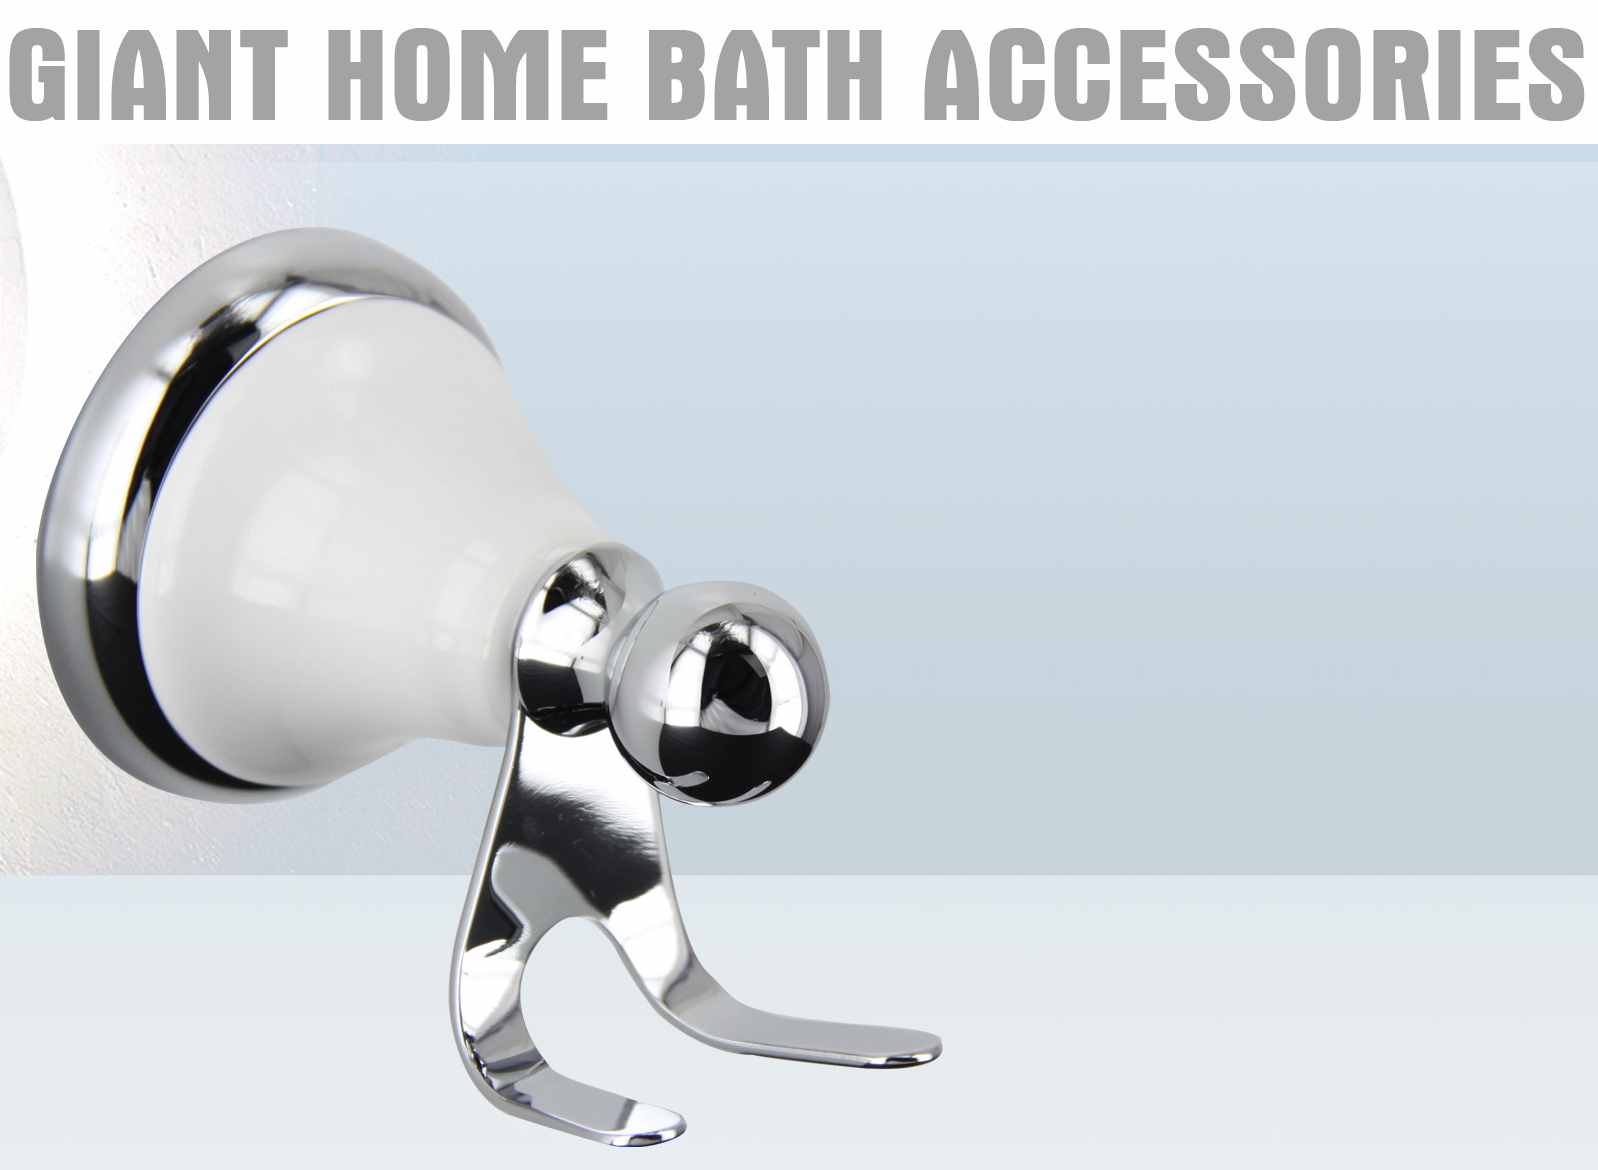 Giant Home Bath Accessories Co., Ltd